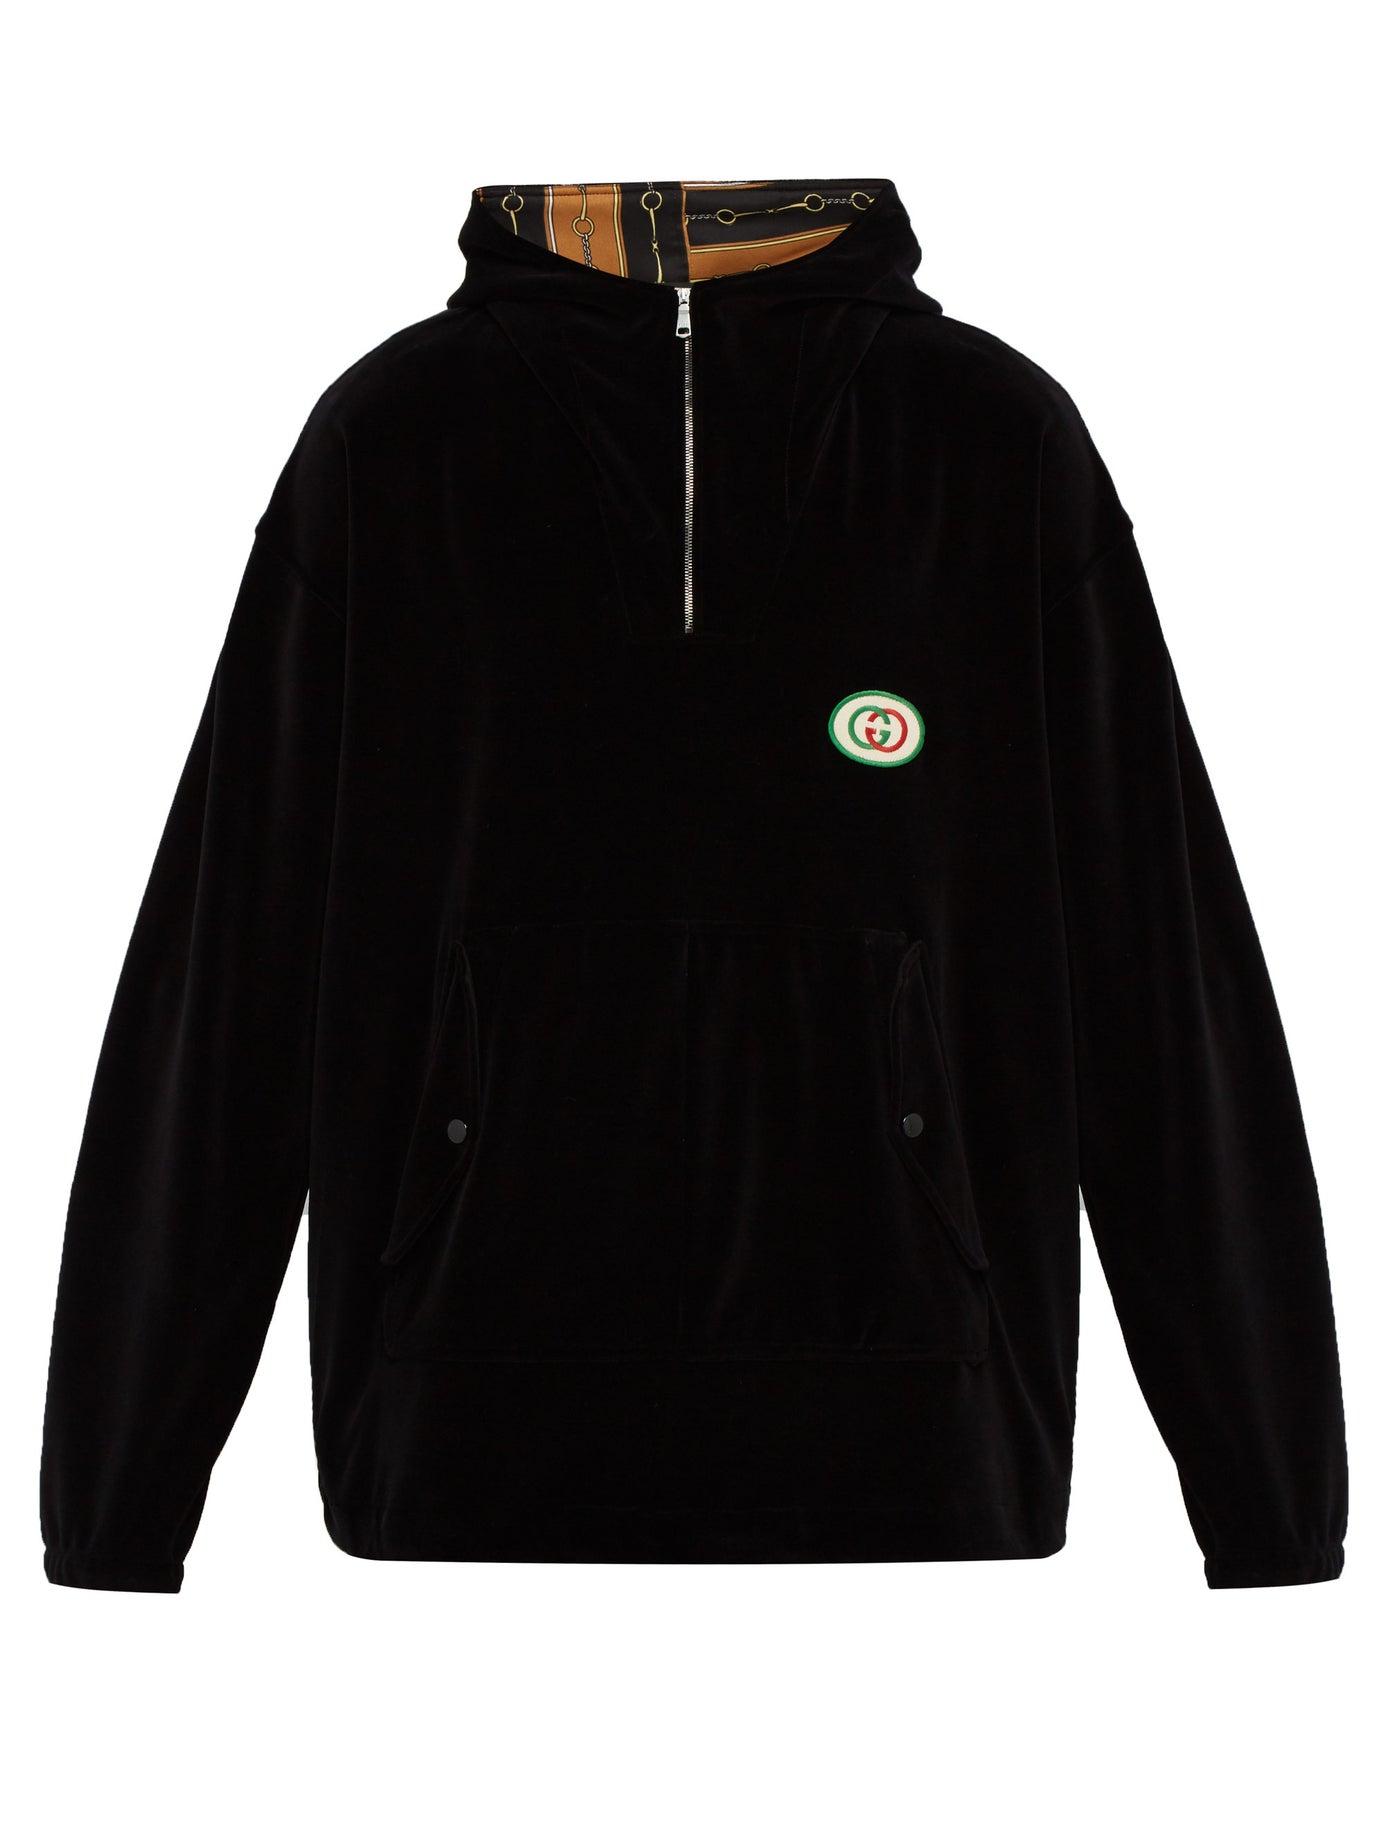 Gucci Logo Embroidered Velvet Hooded Sweatshirt in Black for Men - Lyst